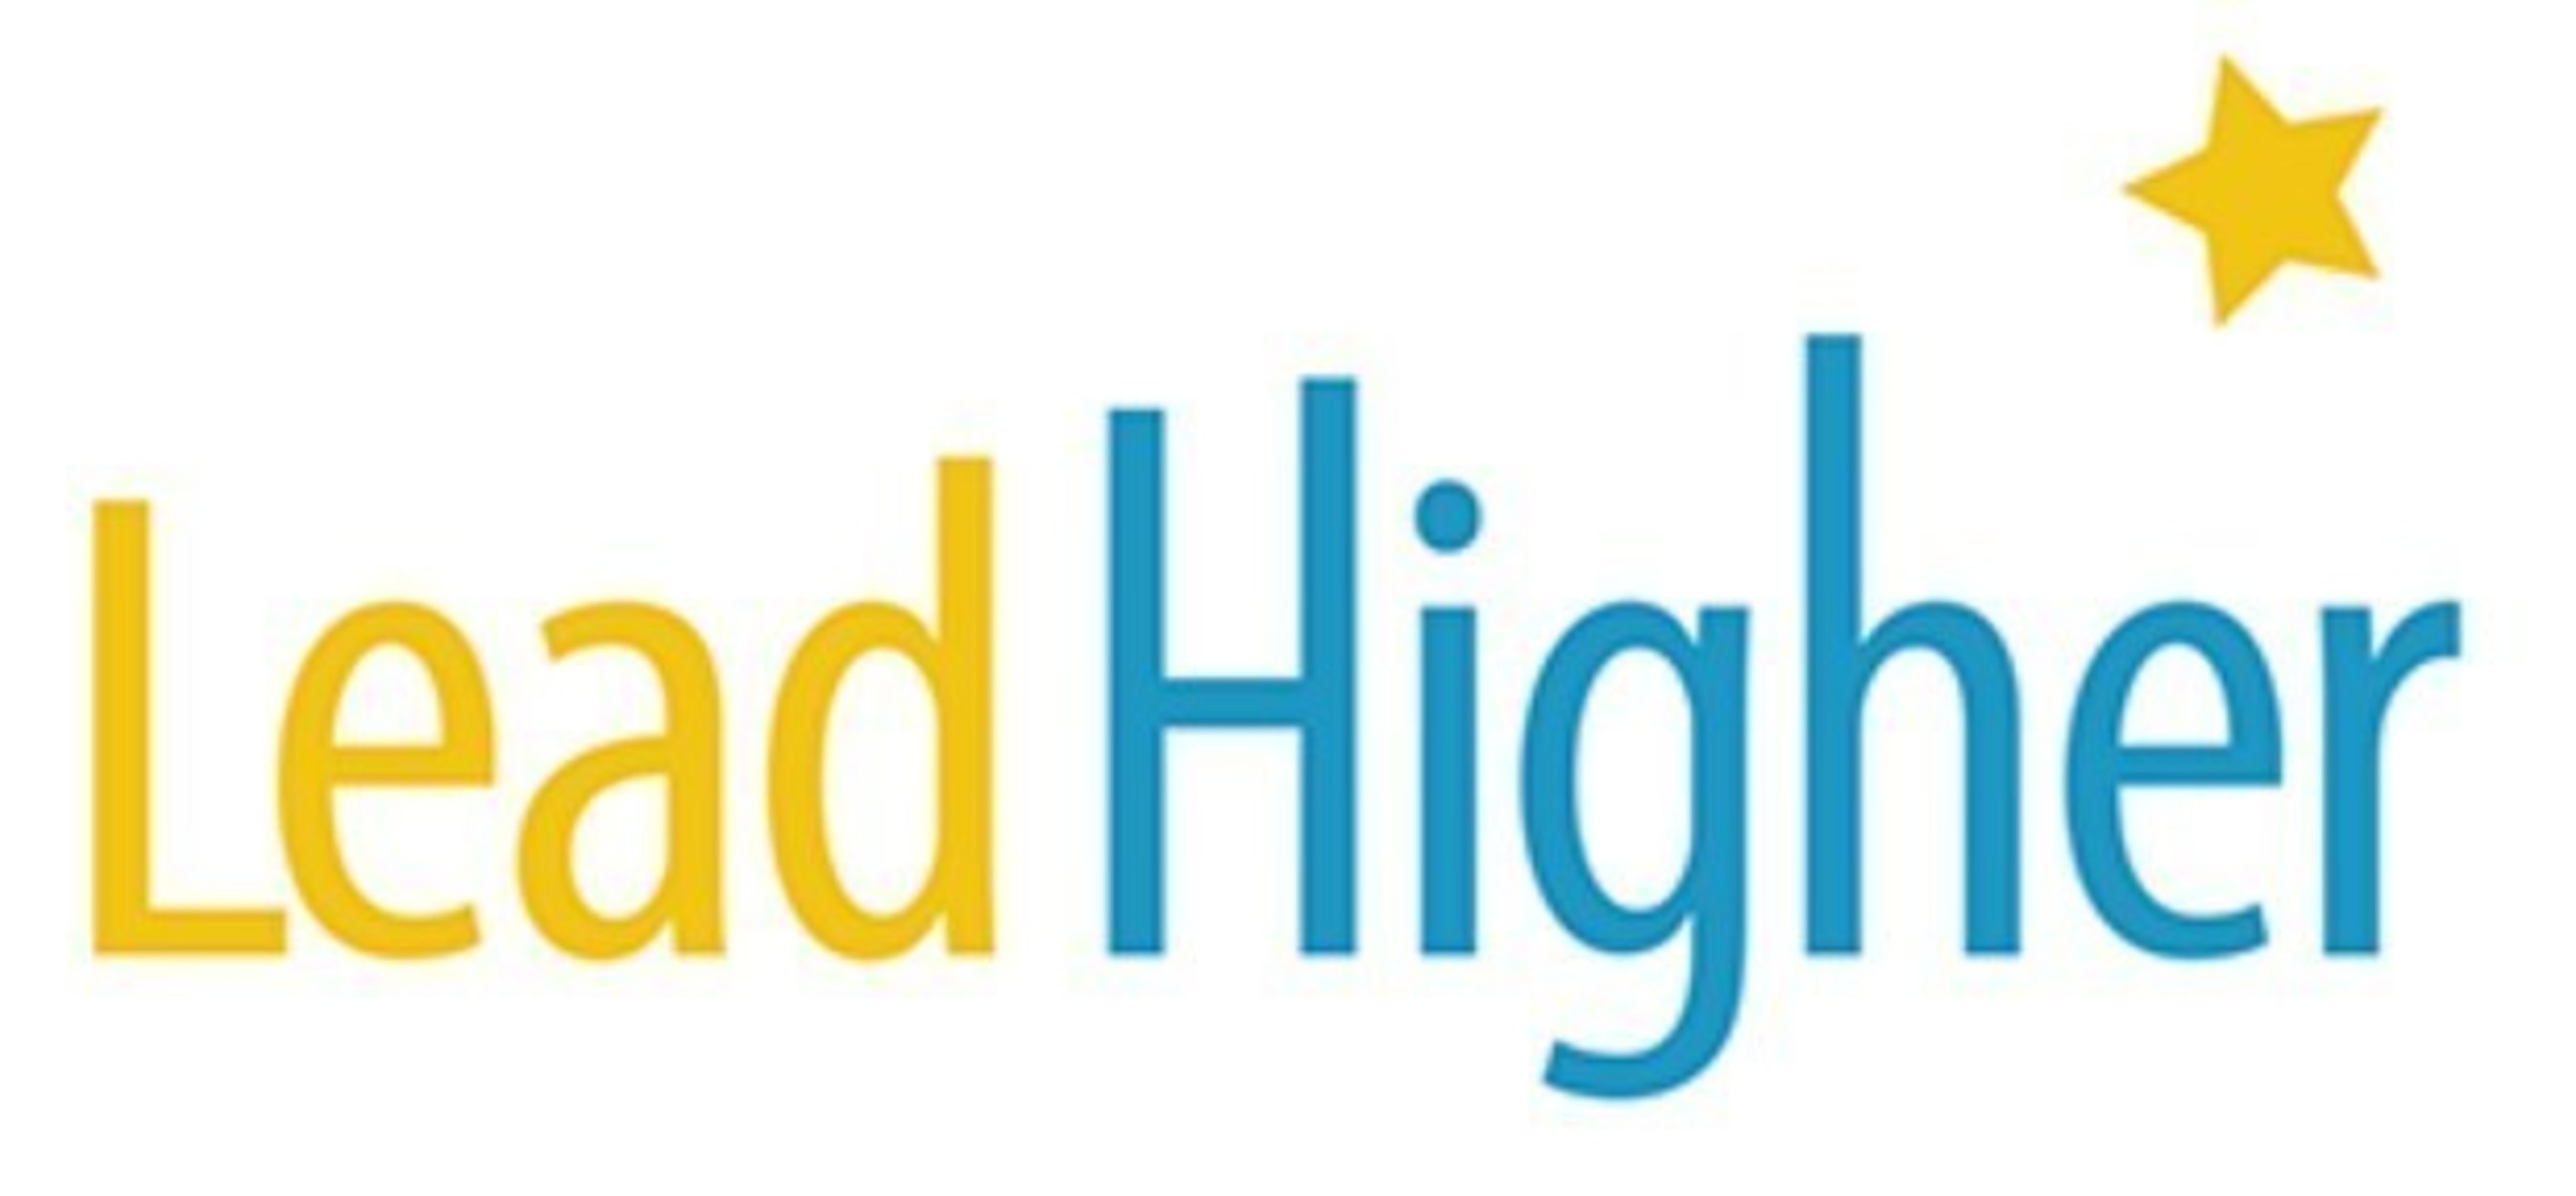 Lead Higher logo